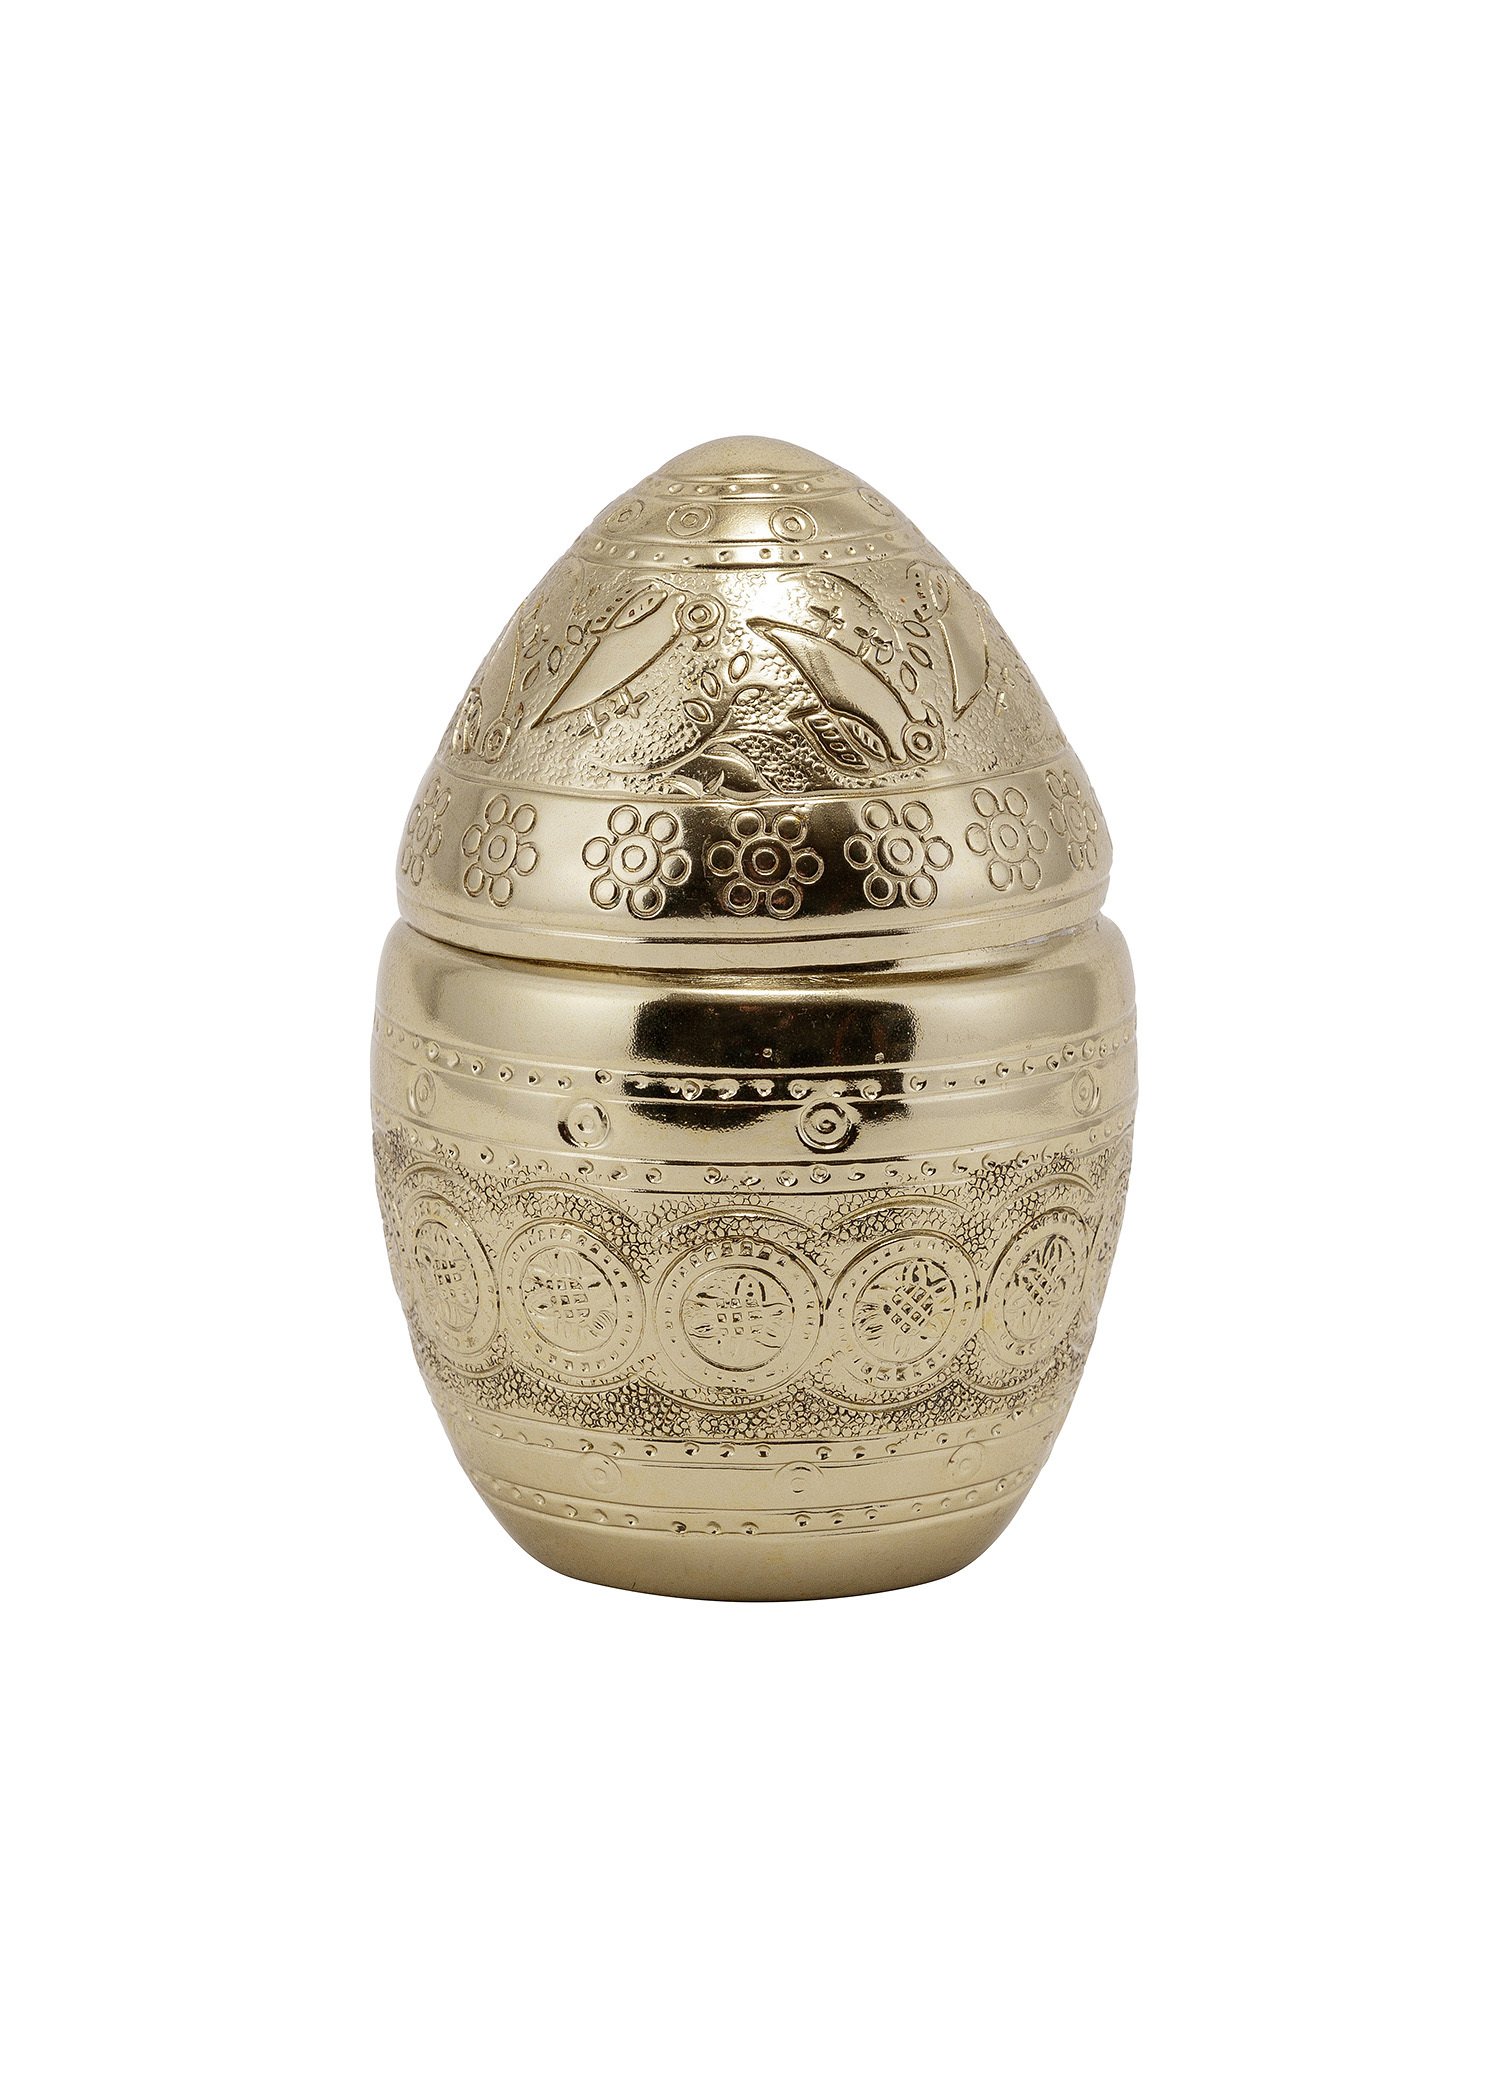 Gold-coloured Easter egg